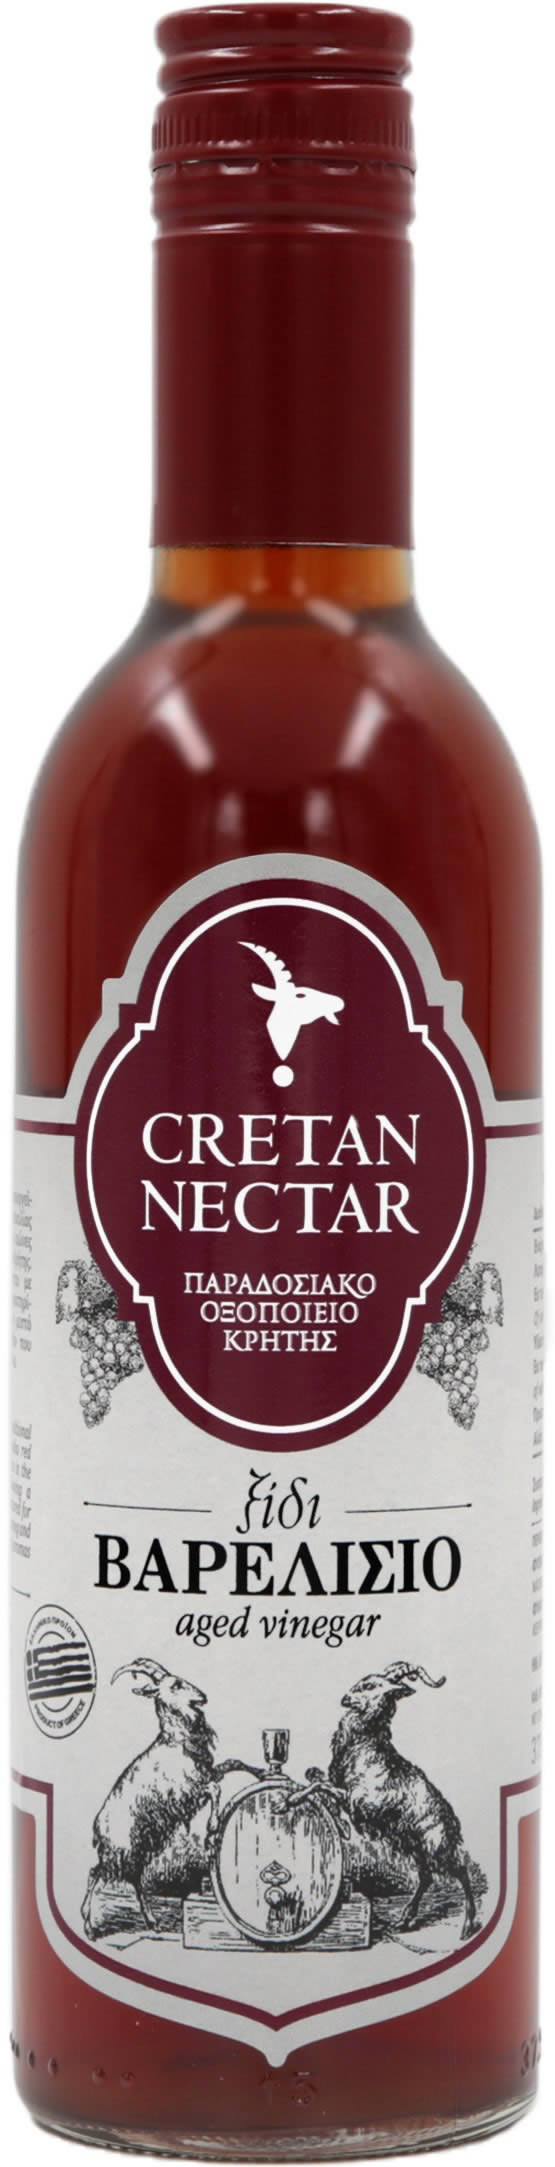 Cretan Nectar - Fassgereifter Essig 375 ml